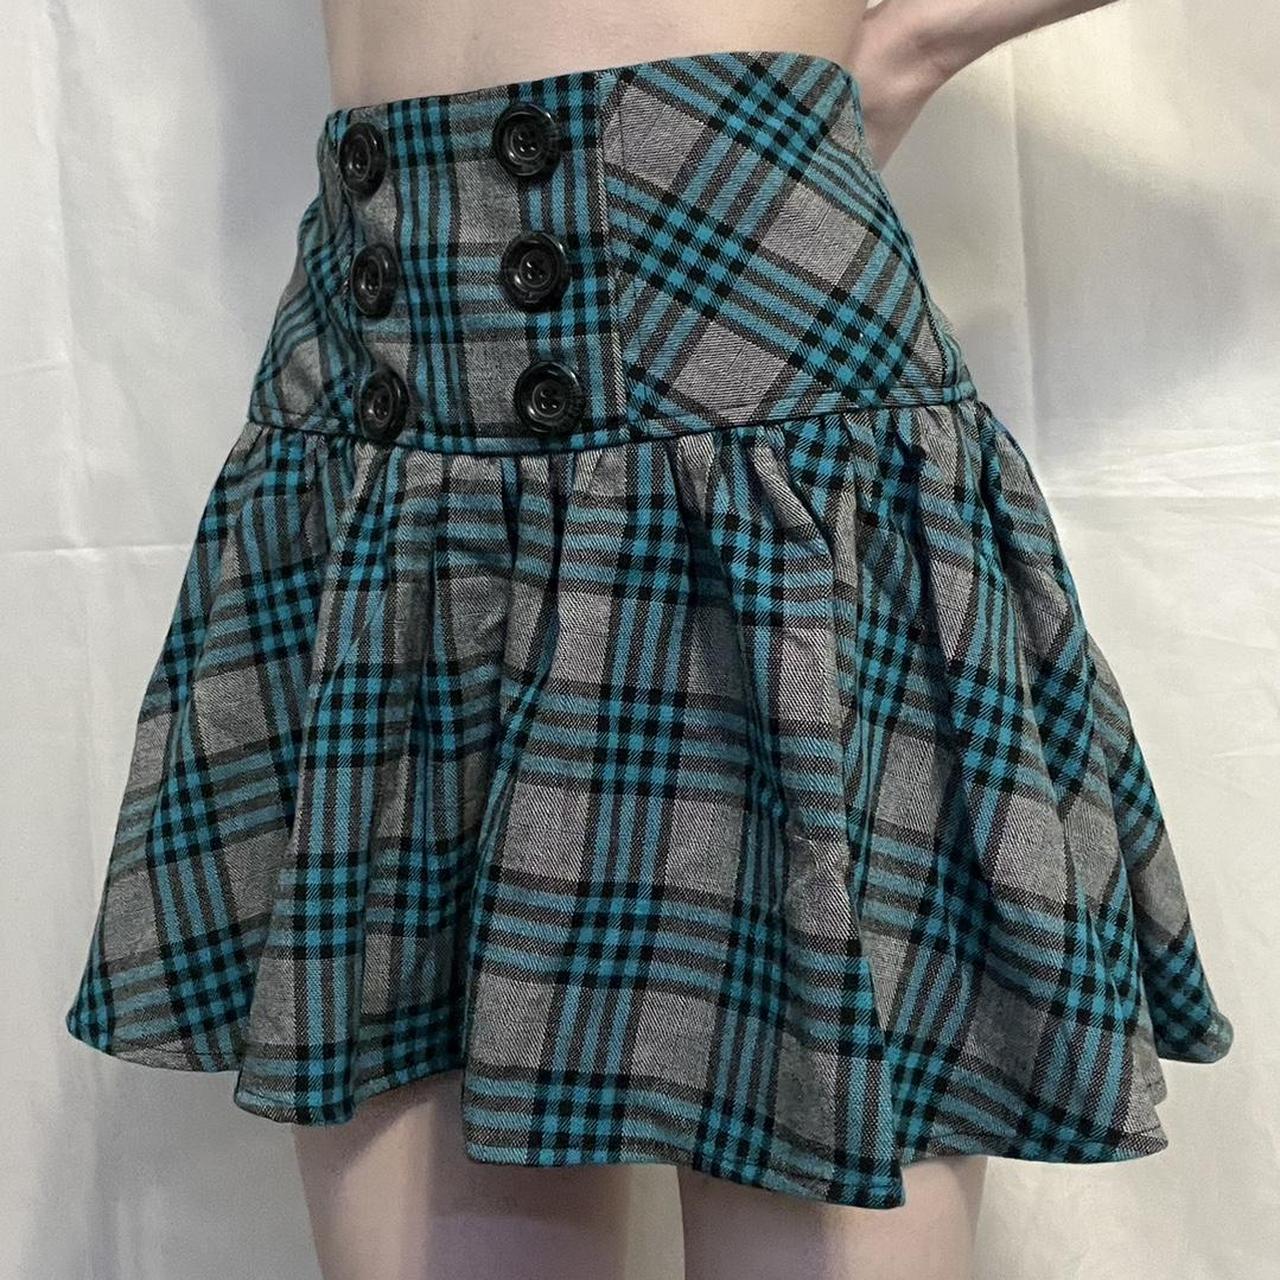 Vintage Plaid Lace Up High Waist Corset Tartan Skirt Womens Gothic